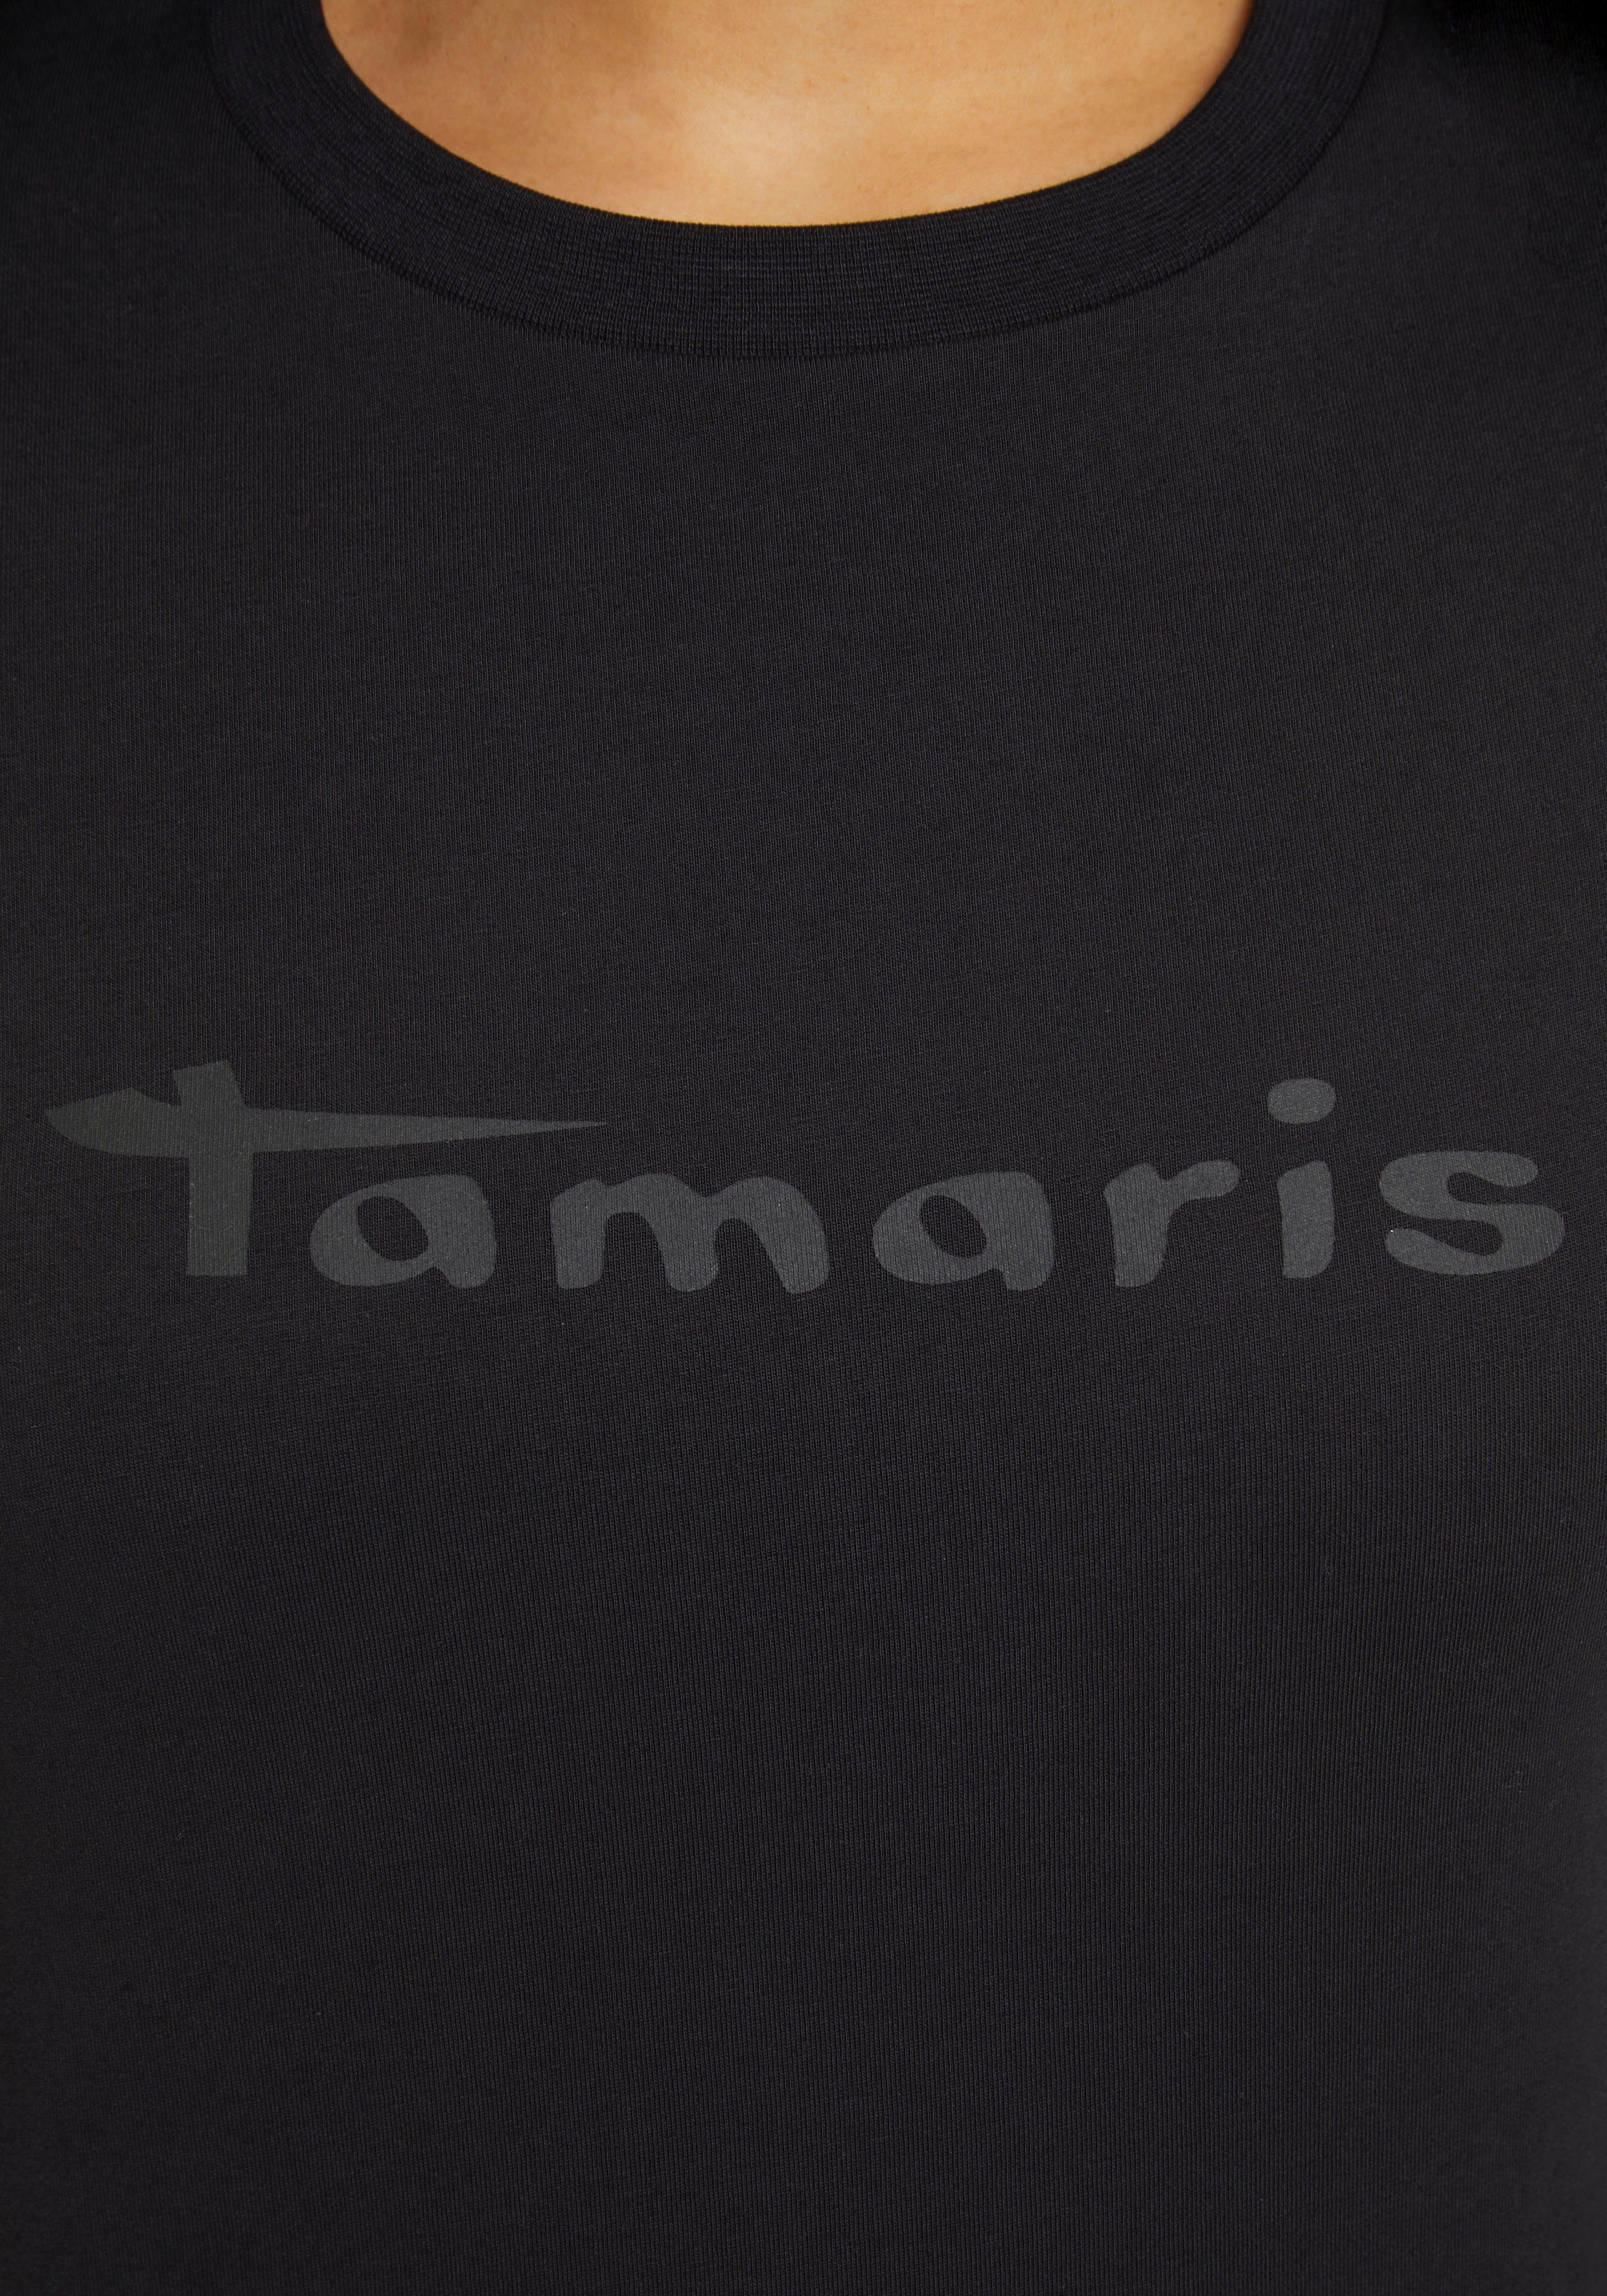 T-Shirt beauty - Rundhalsausschnitt NEUE black mit Tamaris KOLLEKTION